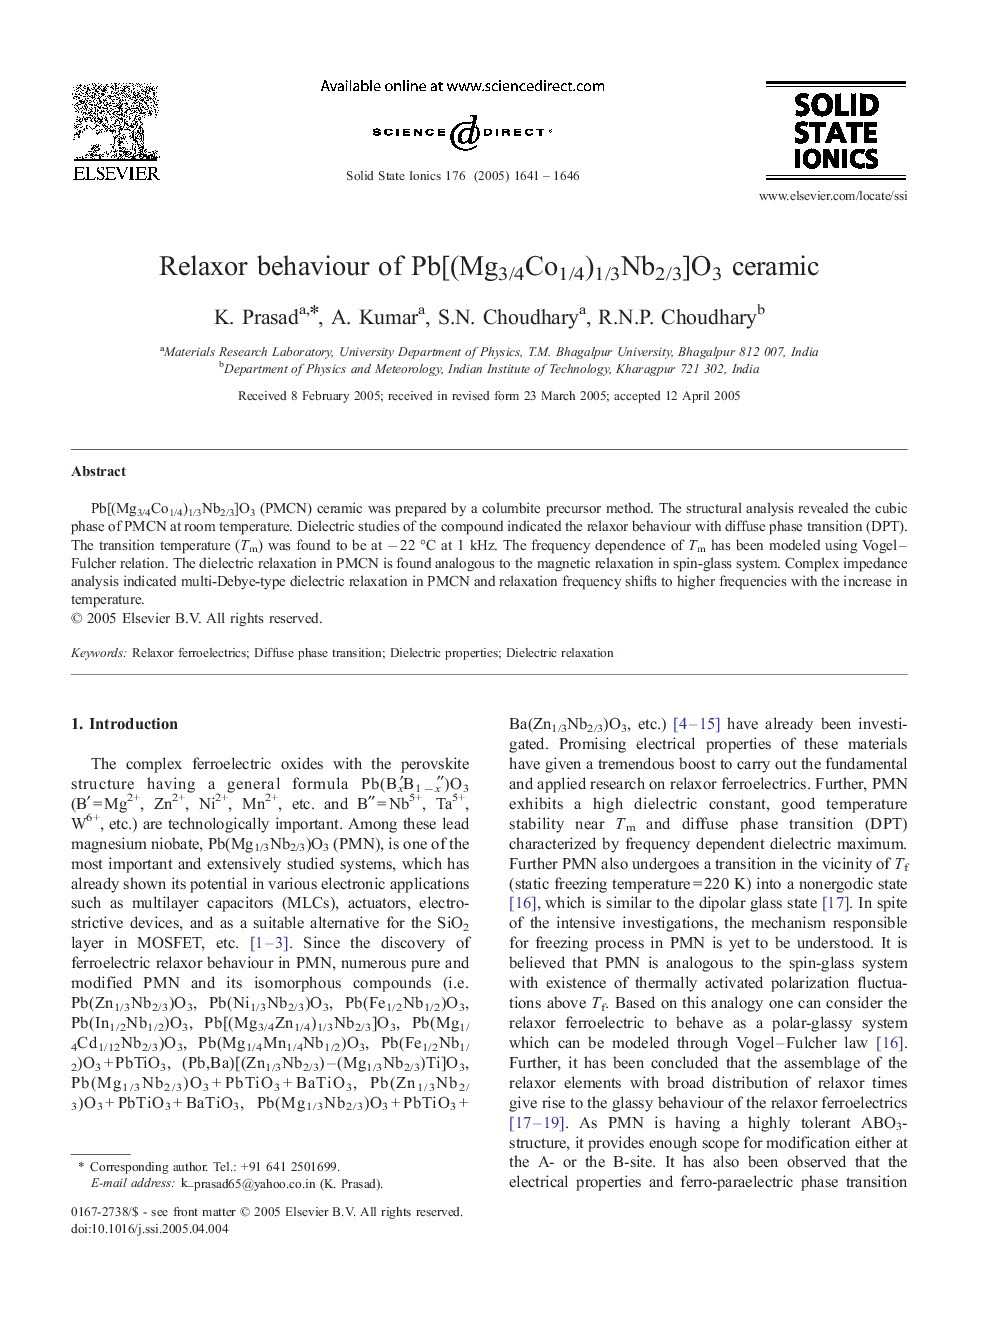 Relaxor behaviour of Pb[(Mg3/4Co1/4)1/3Nb2/3]O3 ceramic